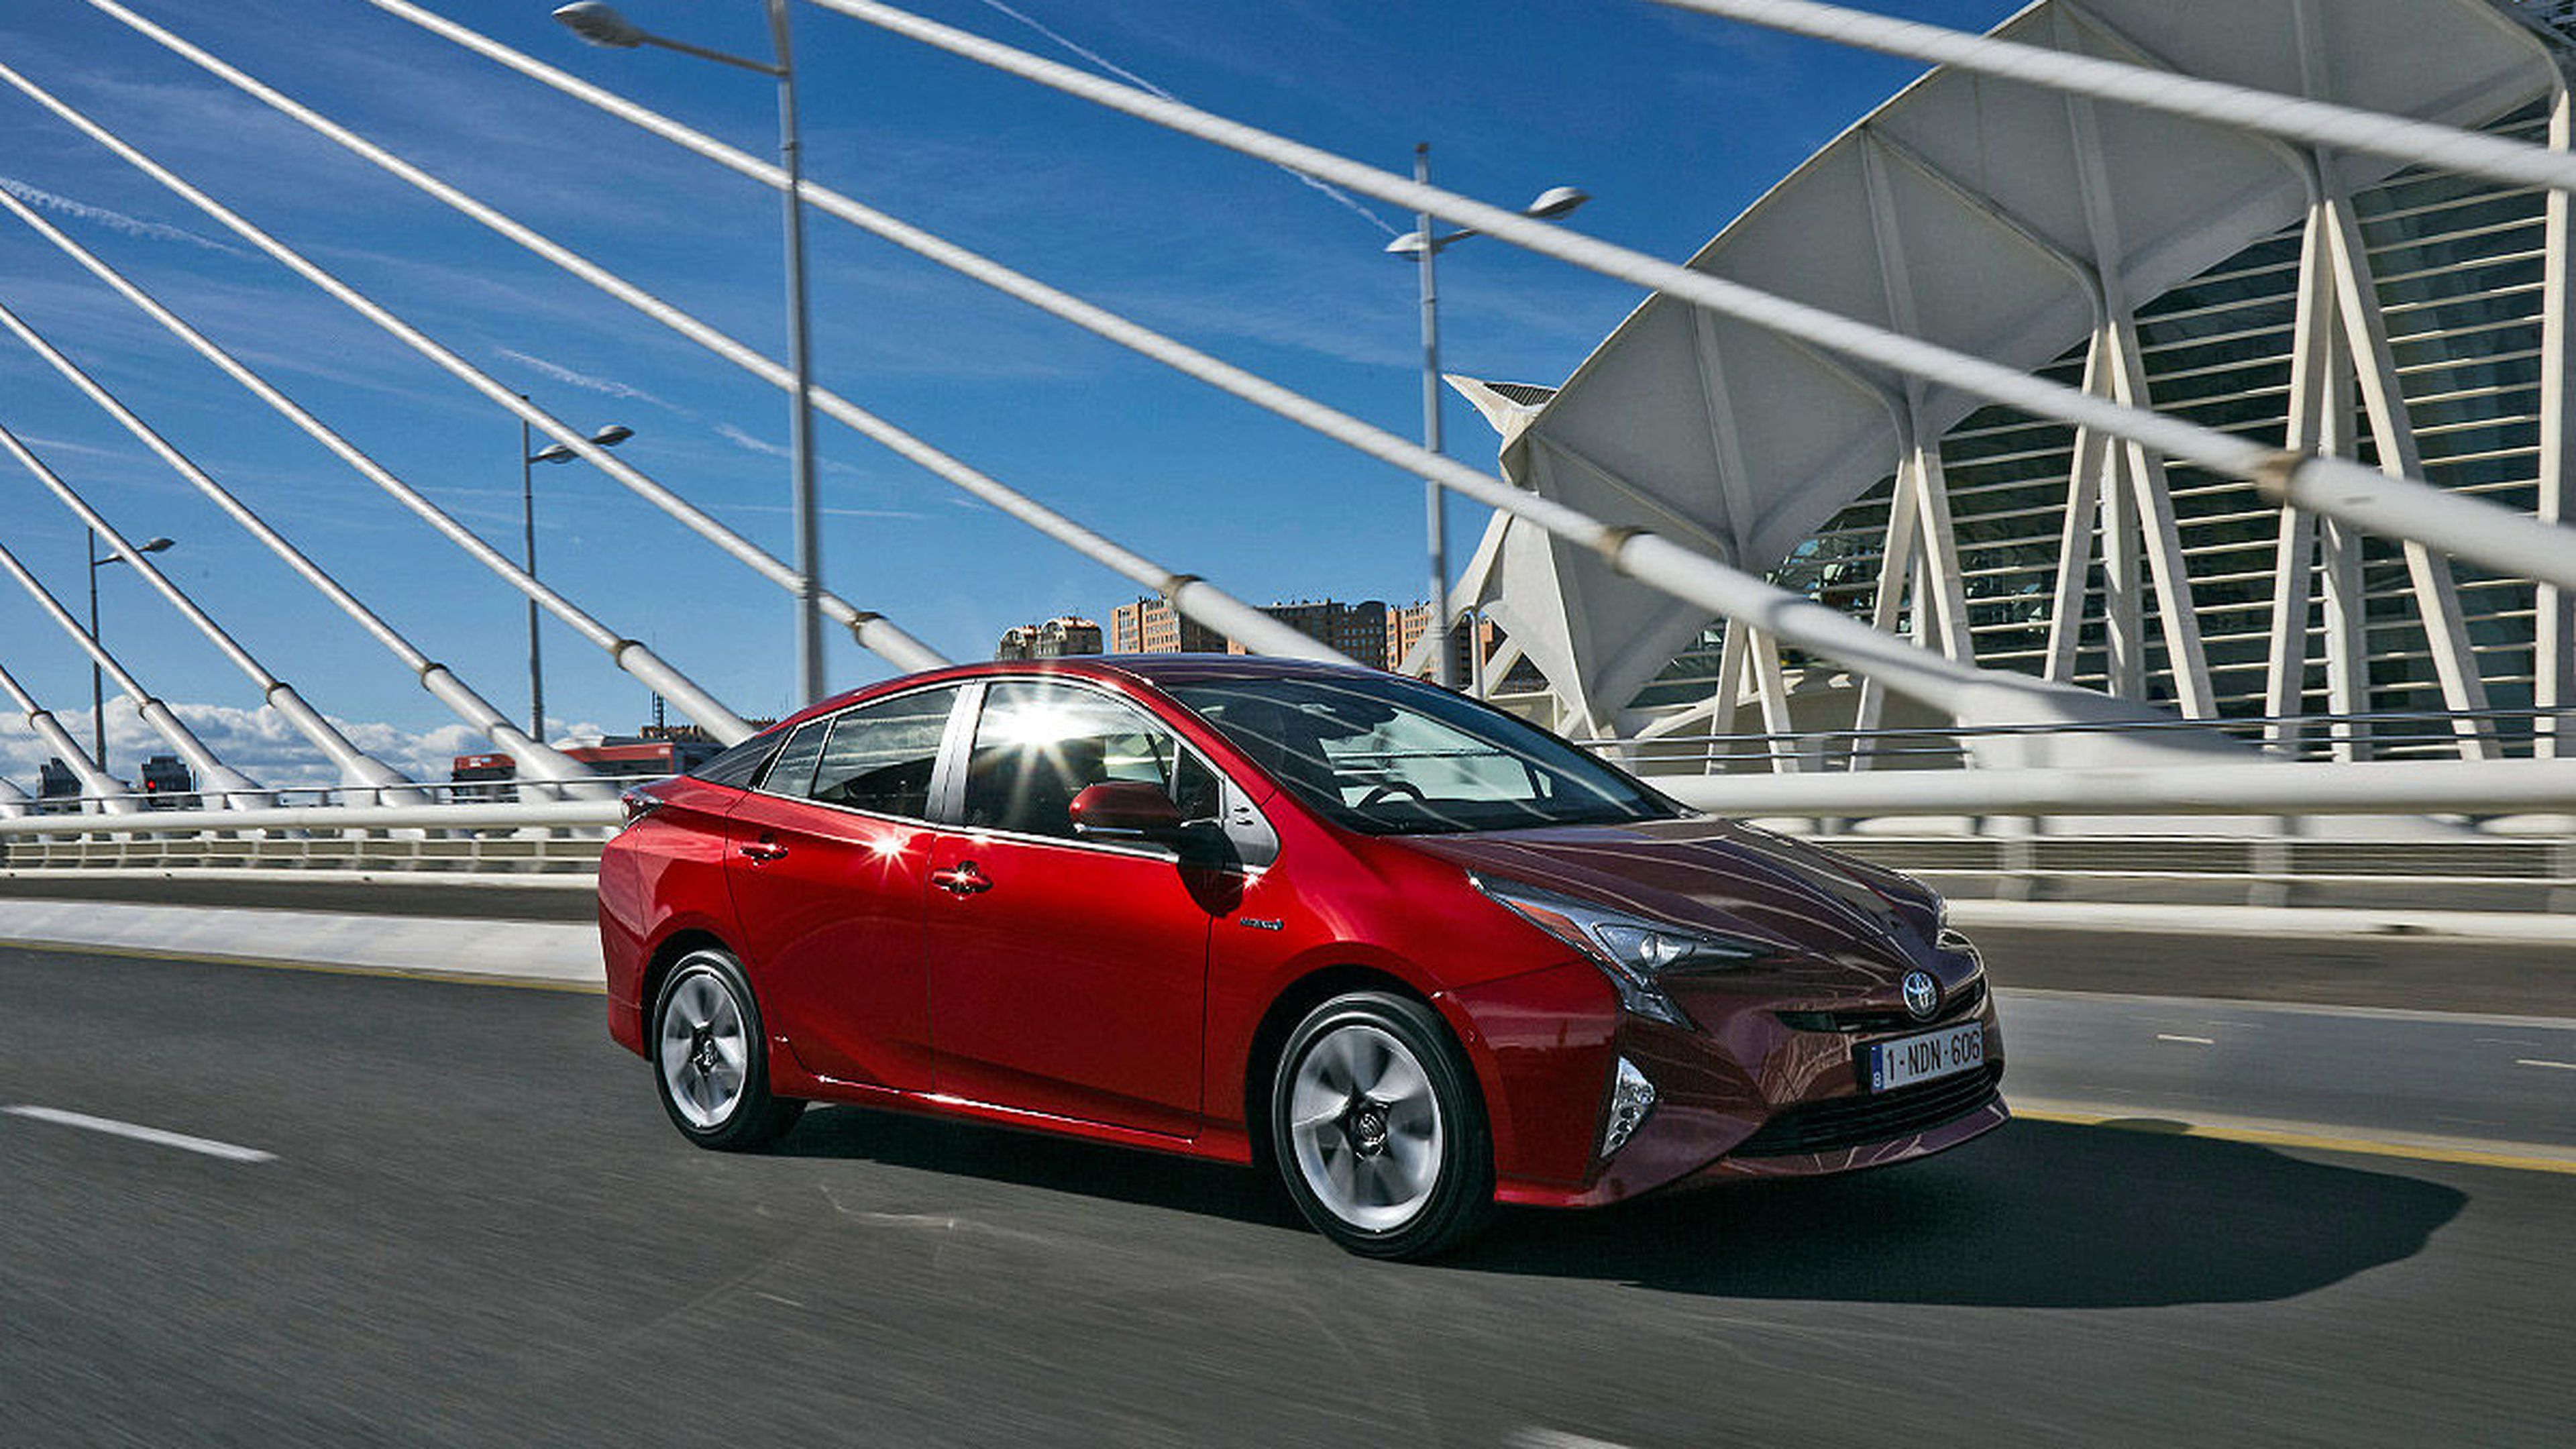 Prueba: nuevo Toyota Prius 2016